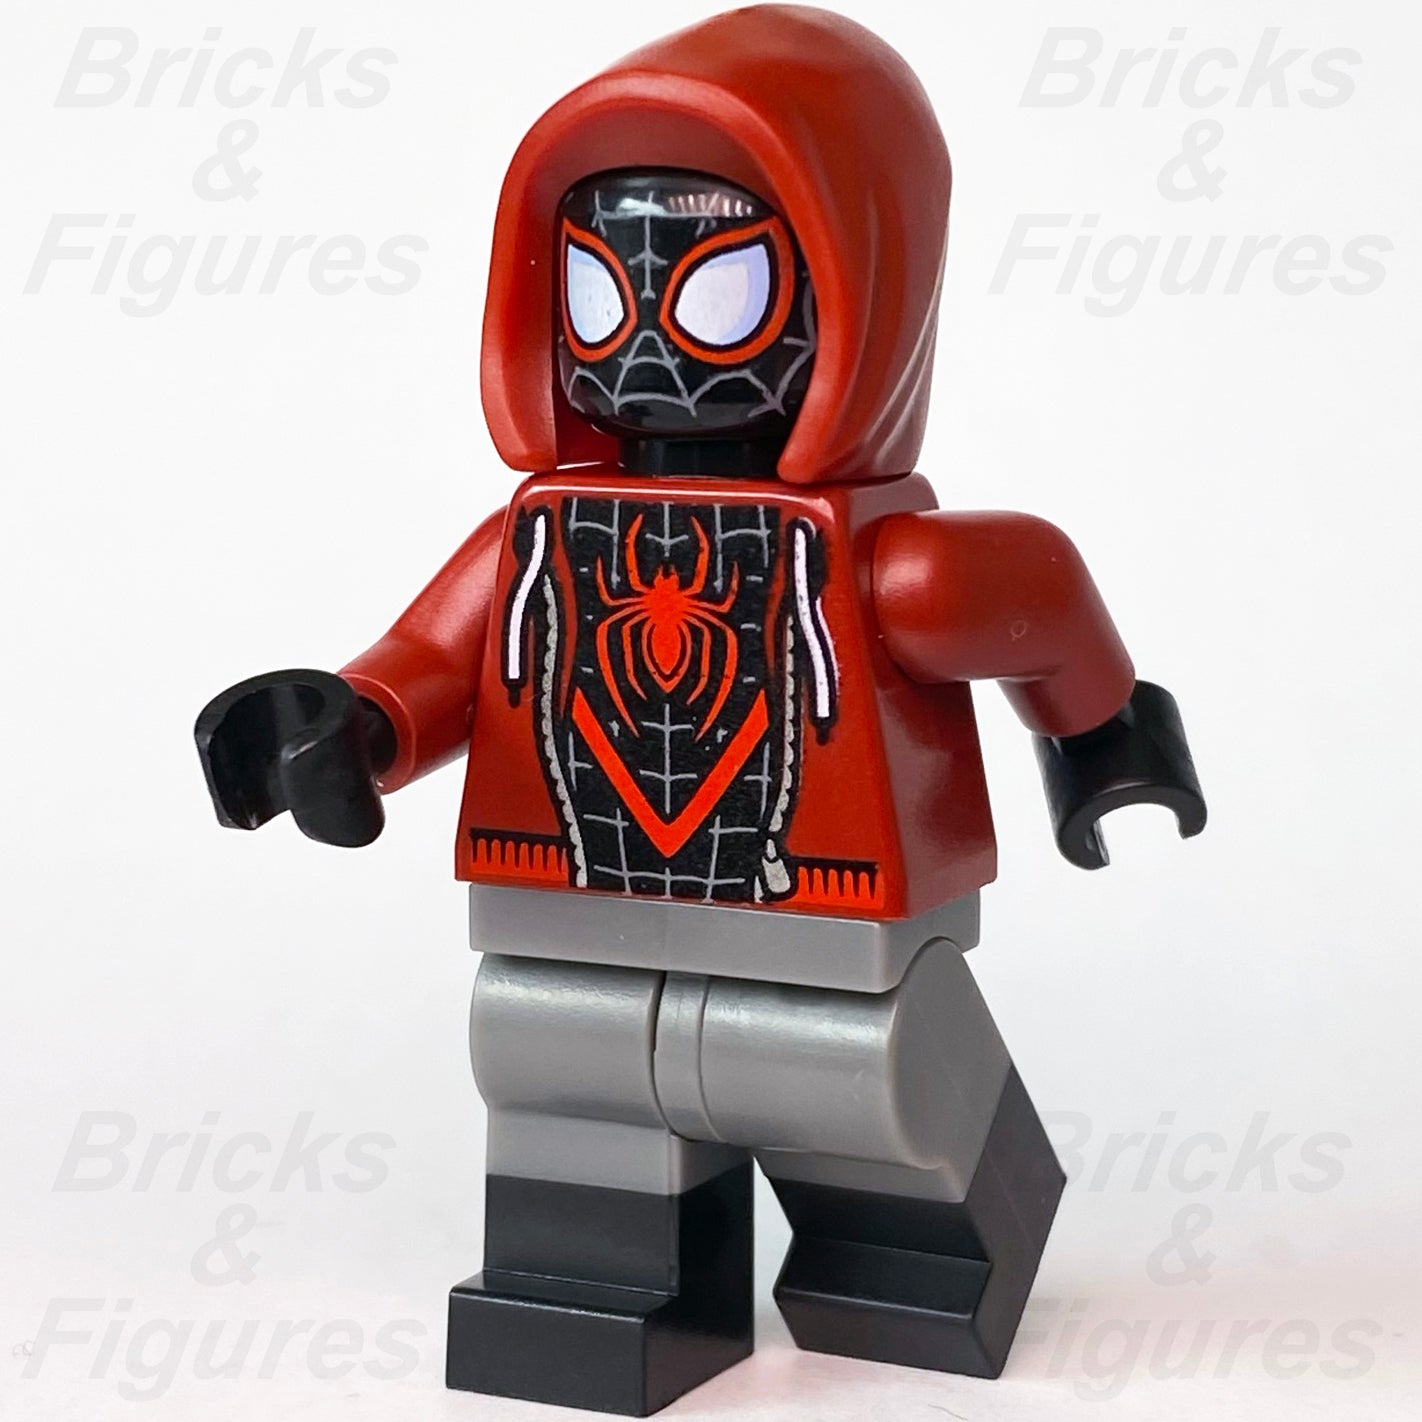 LEGO Miles Morales Minifigures